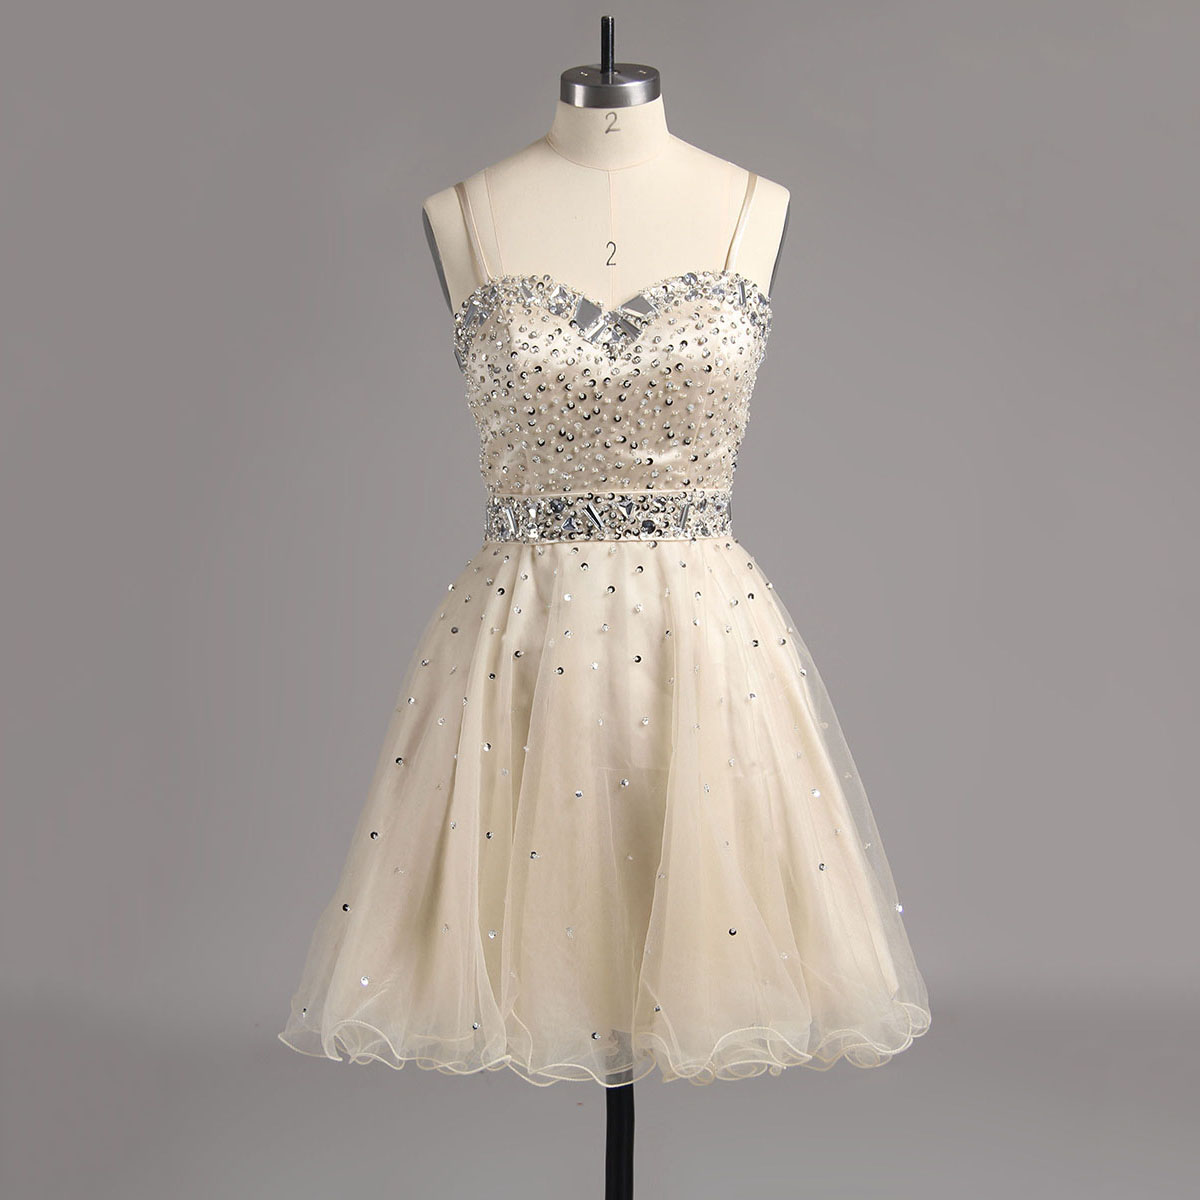 Princess Spaghetti Straps Homecoming Dress, Elegant Organza Homecoming Dress With A Crystal Ribbon, Sparkling Beaded Short Homecoming Dress